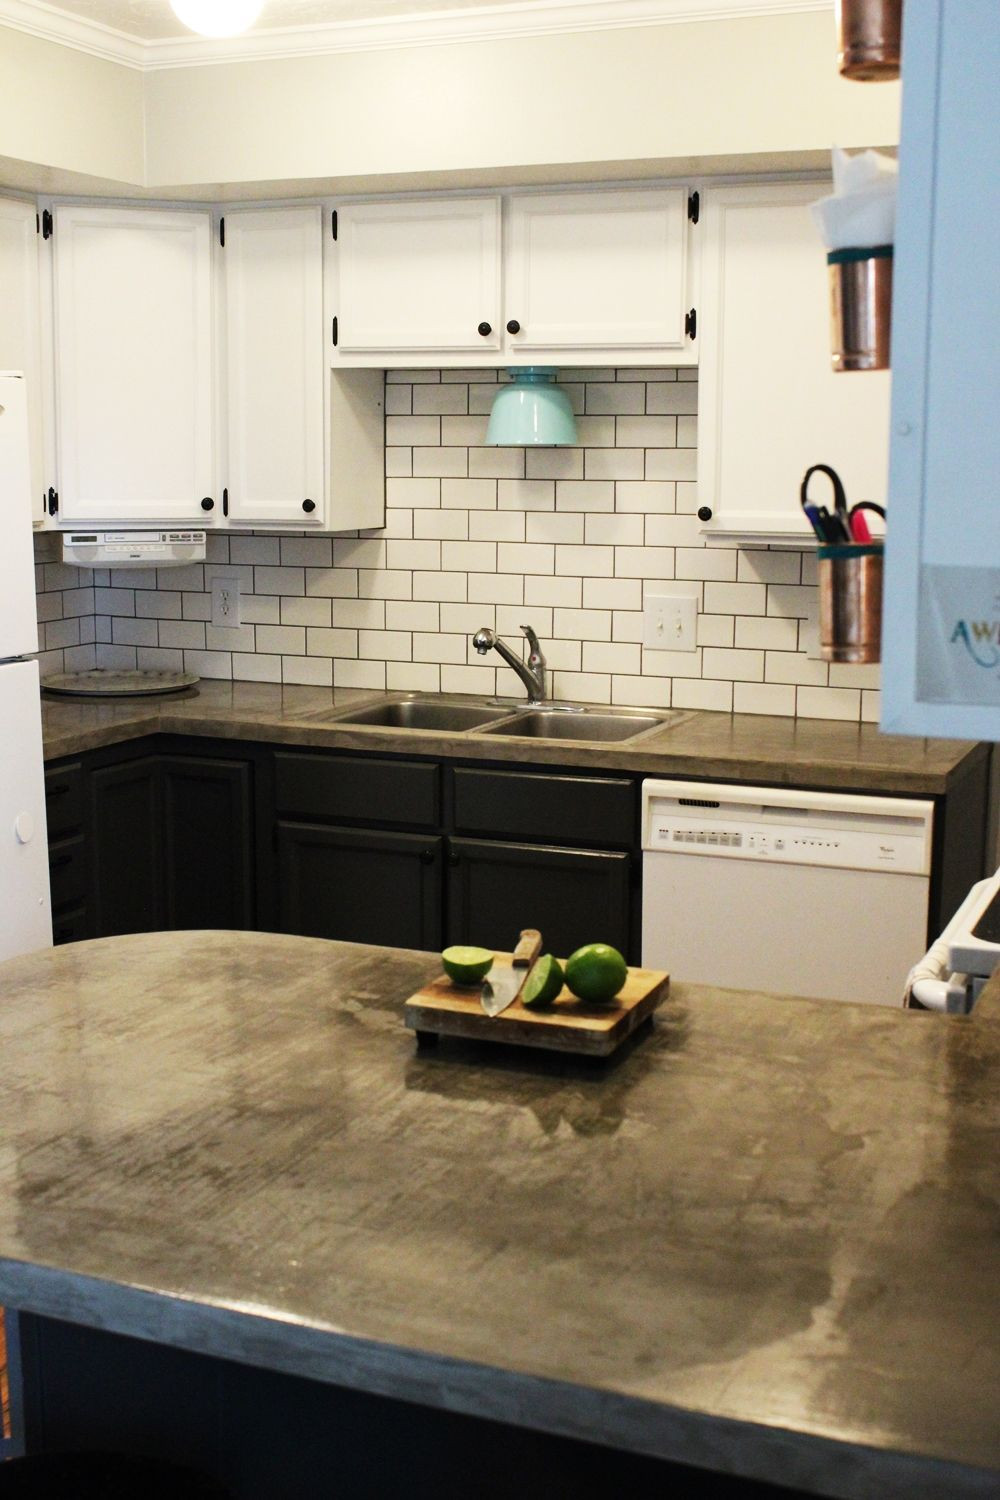 Tiled Kitchen Backsplash
 How to Install a Subway Tile Kitchen Backsplash